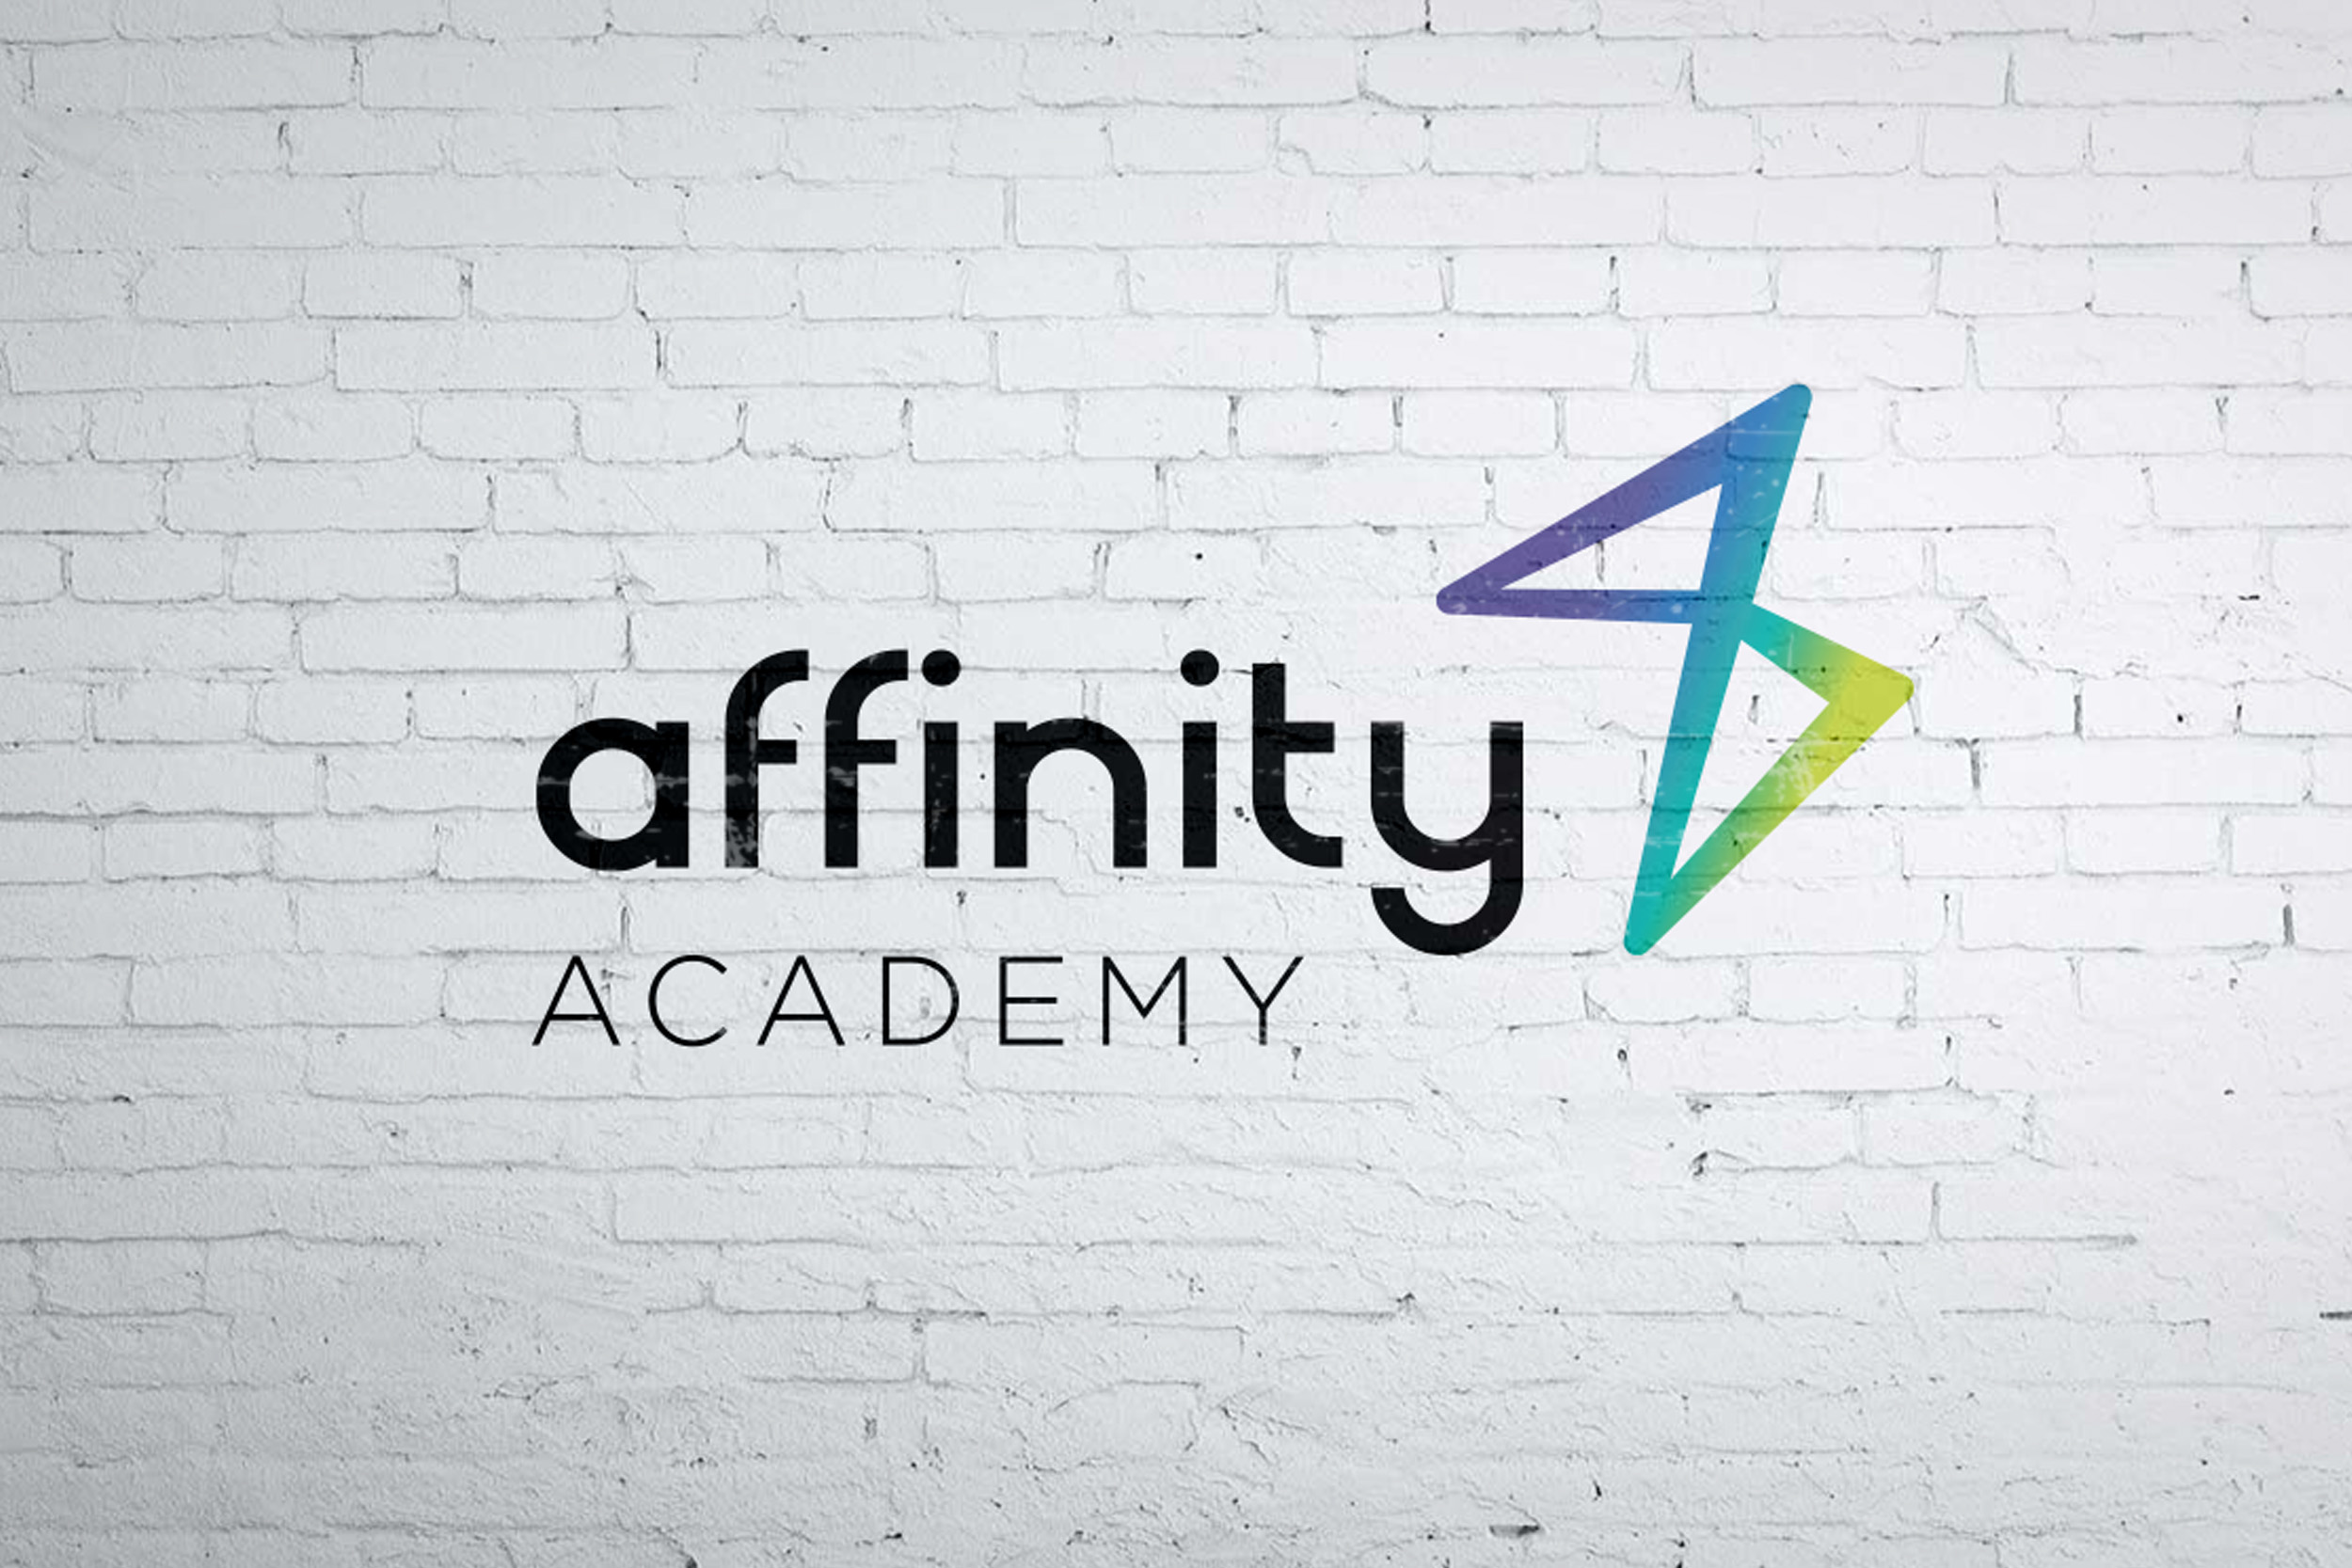 Affinity Academy new brand identity design - logo on white wall